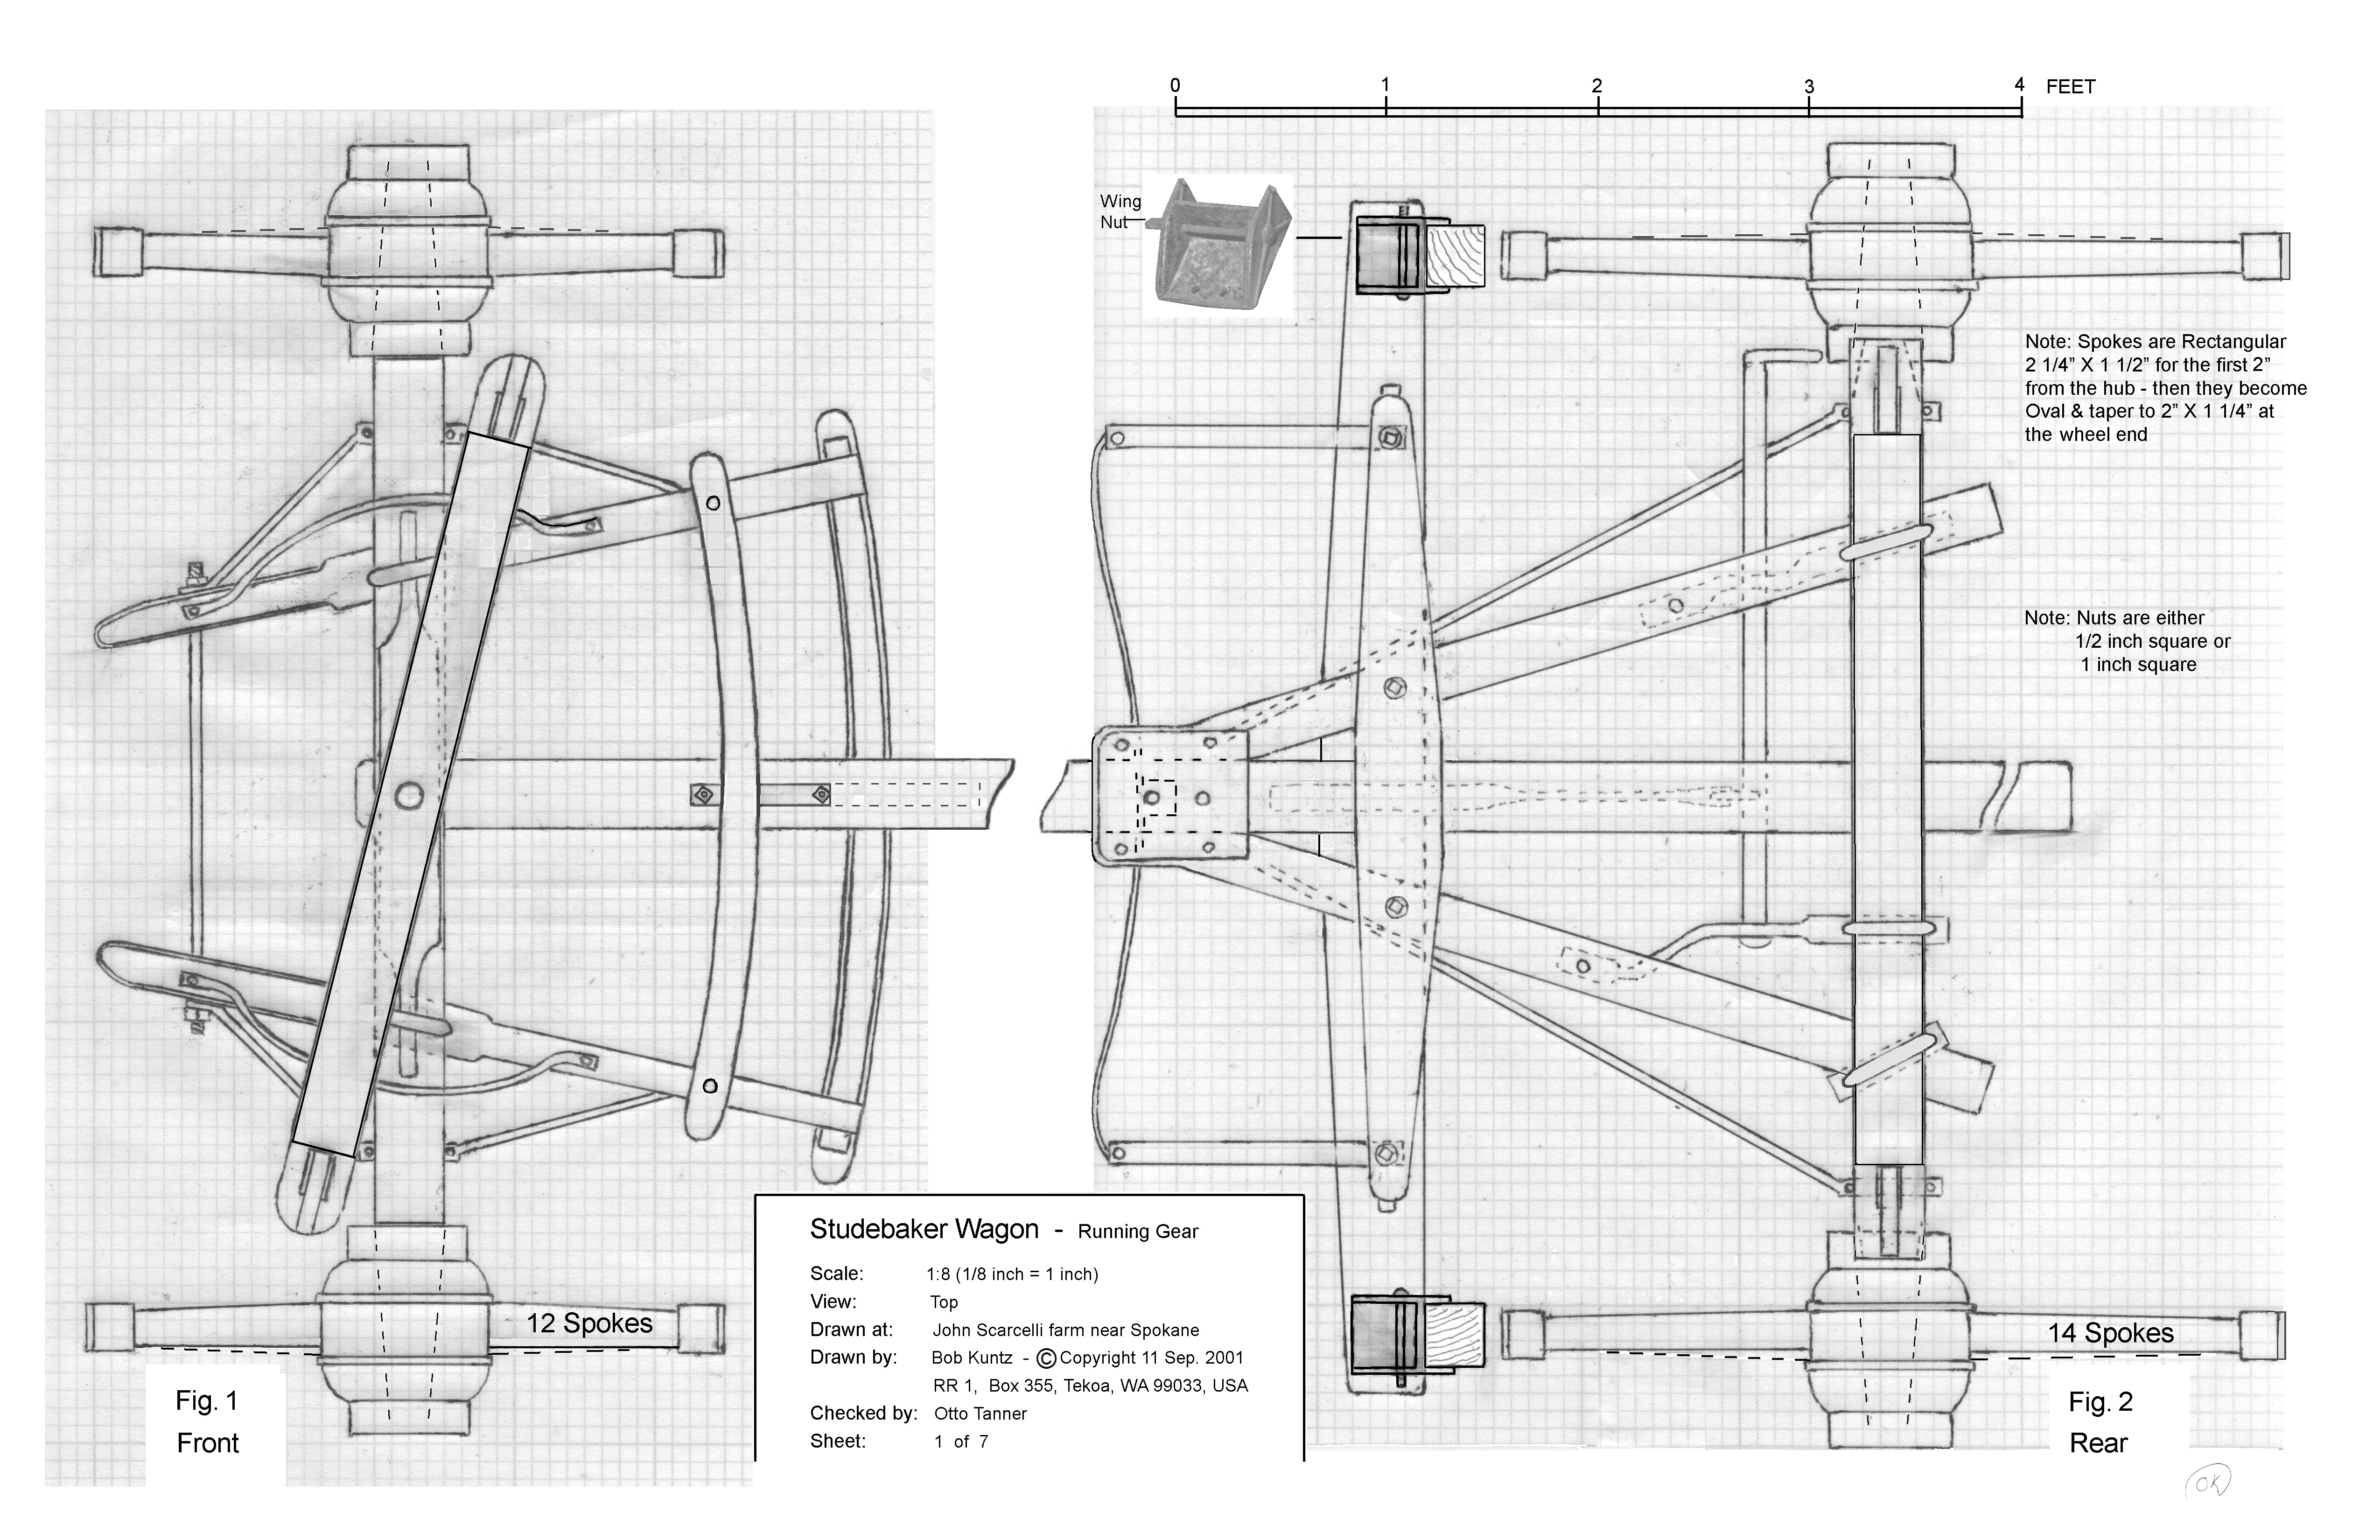 Studebaker Wagon Plans - Sheet 1 